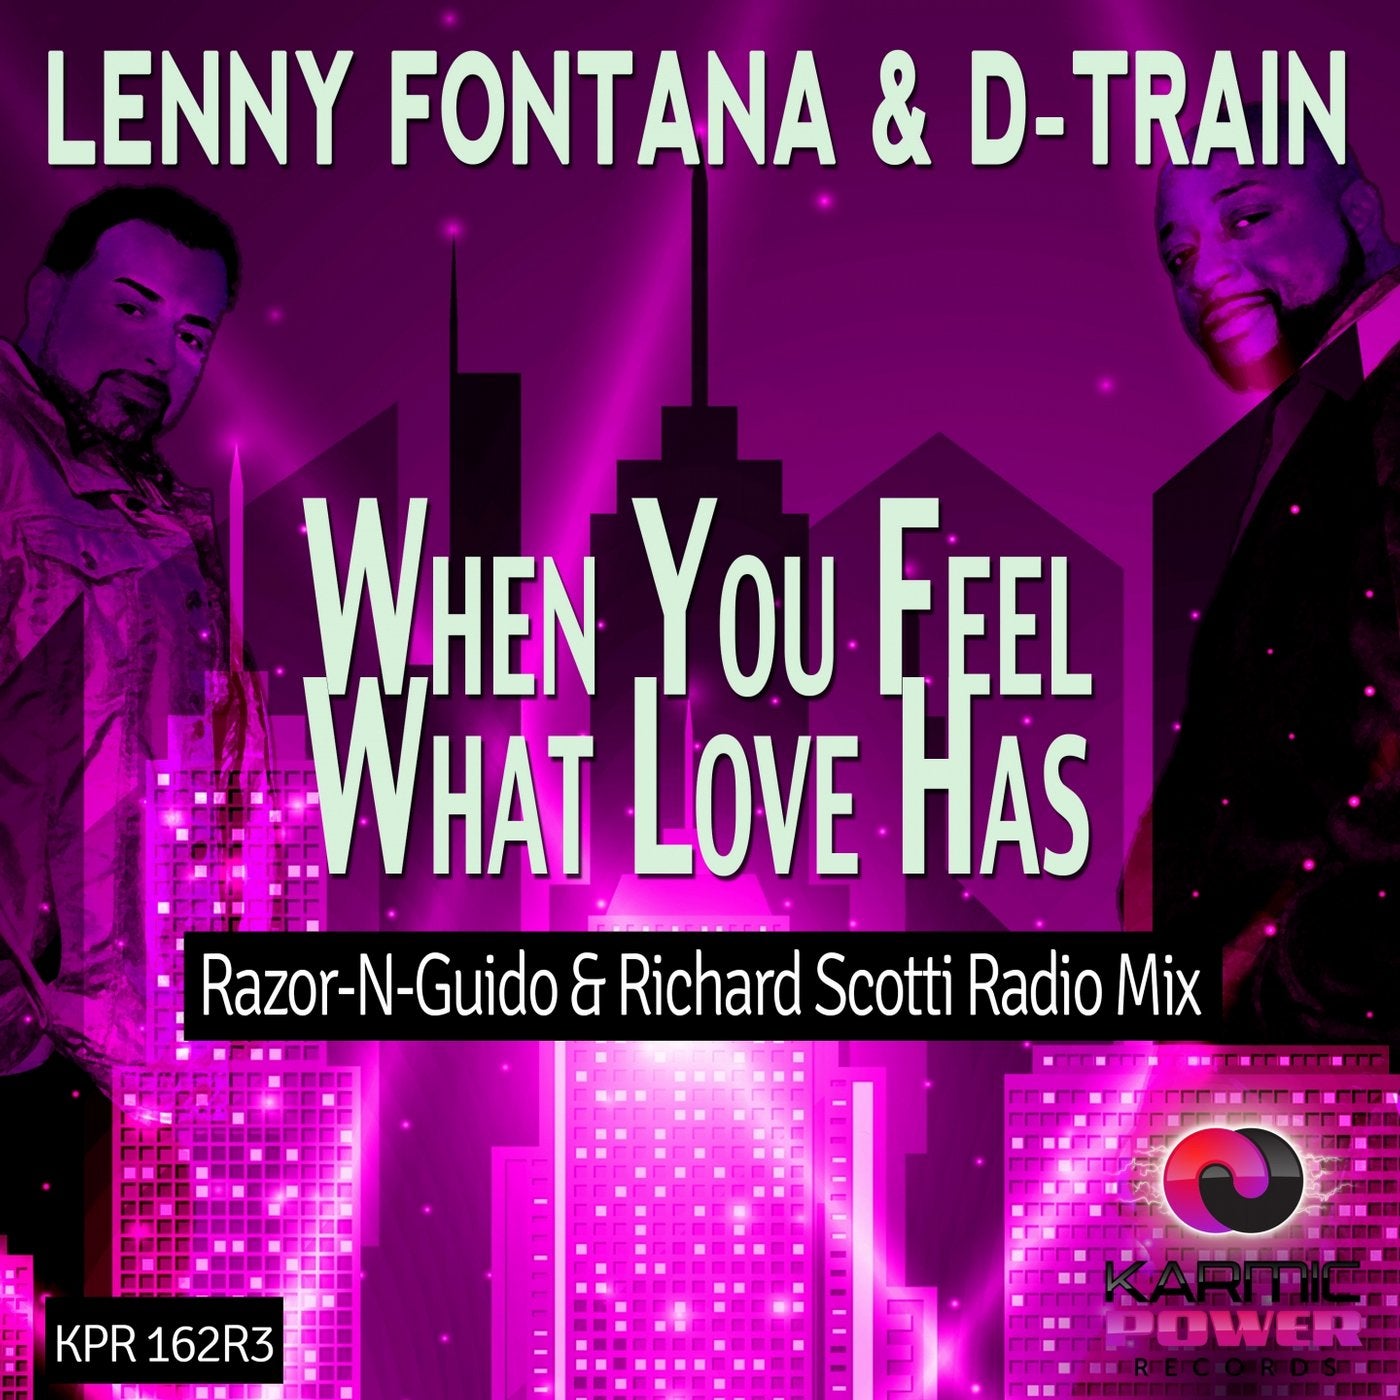 When You Feel What Love Has (Razor-N-Guido & Richard Scotti Radio Mix)